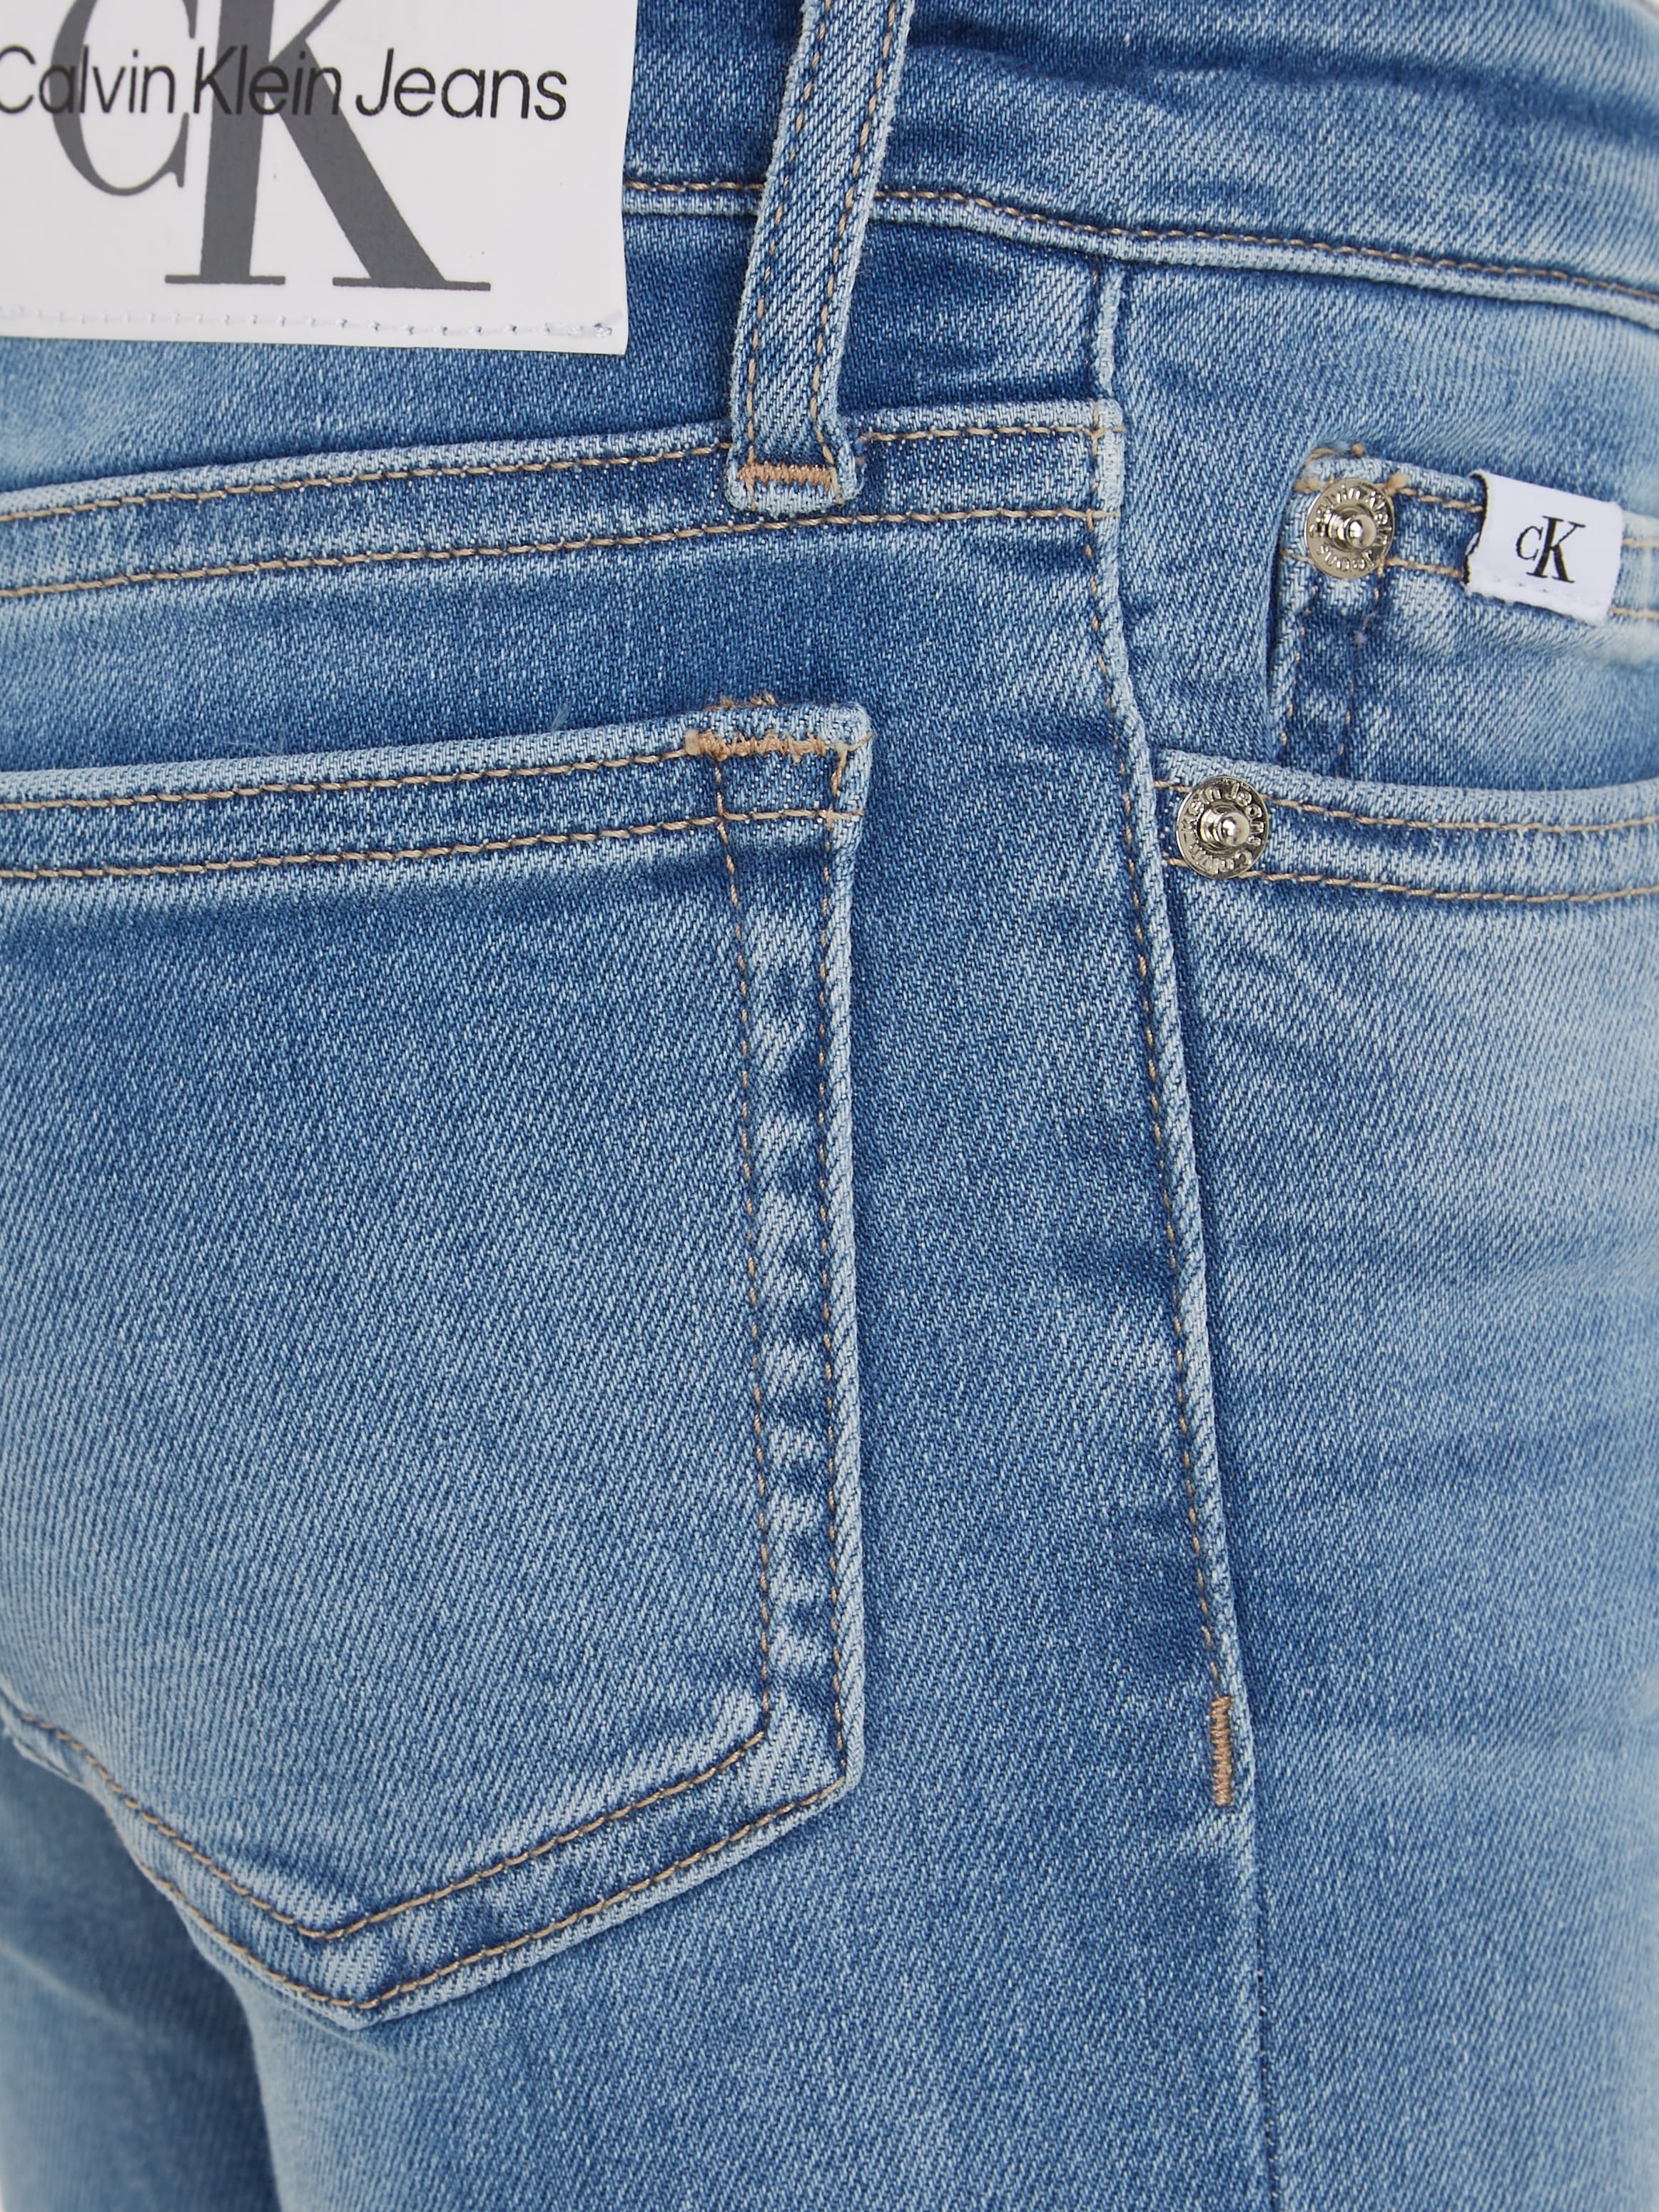 MR SPLIT MID »FLARE BLUE« Jeans Klein Stretch-Jeans Calvin bestellen VISUAL